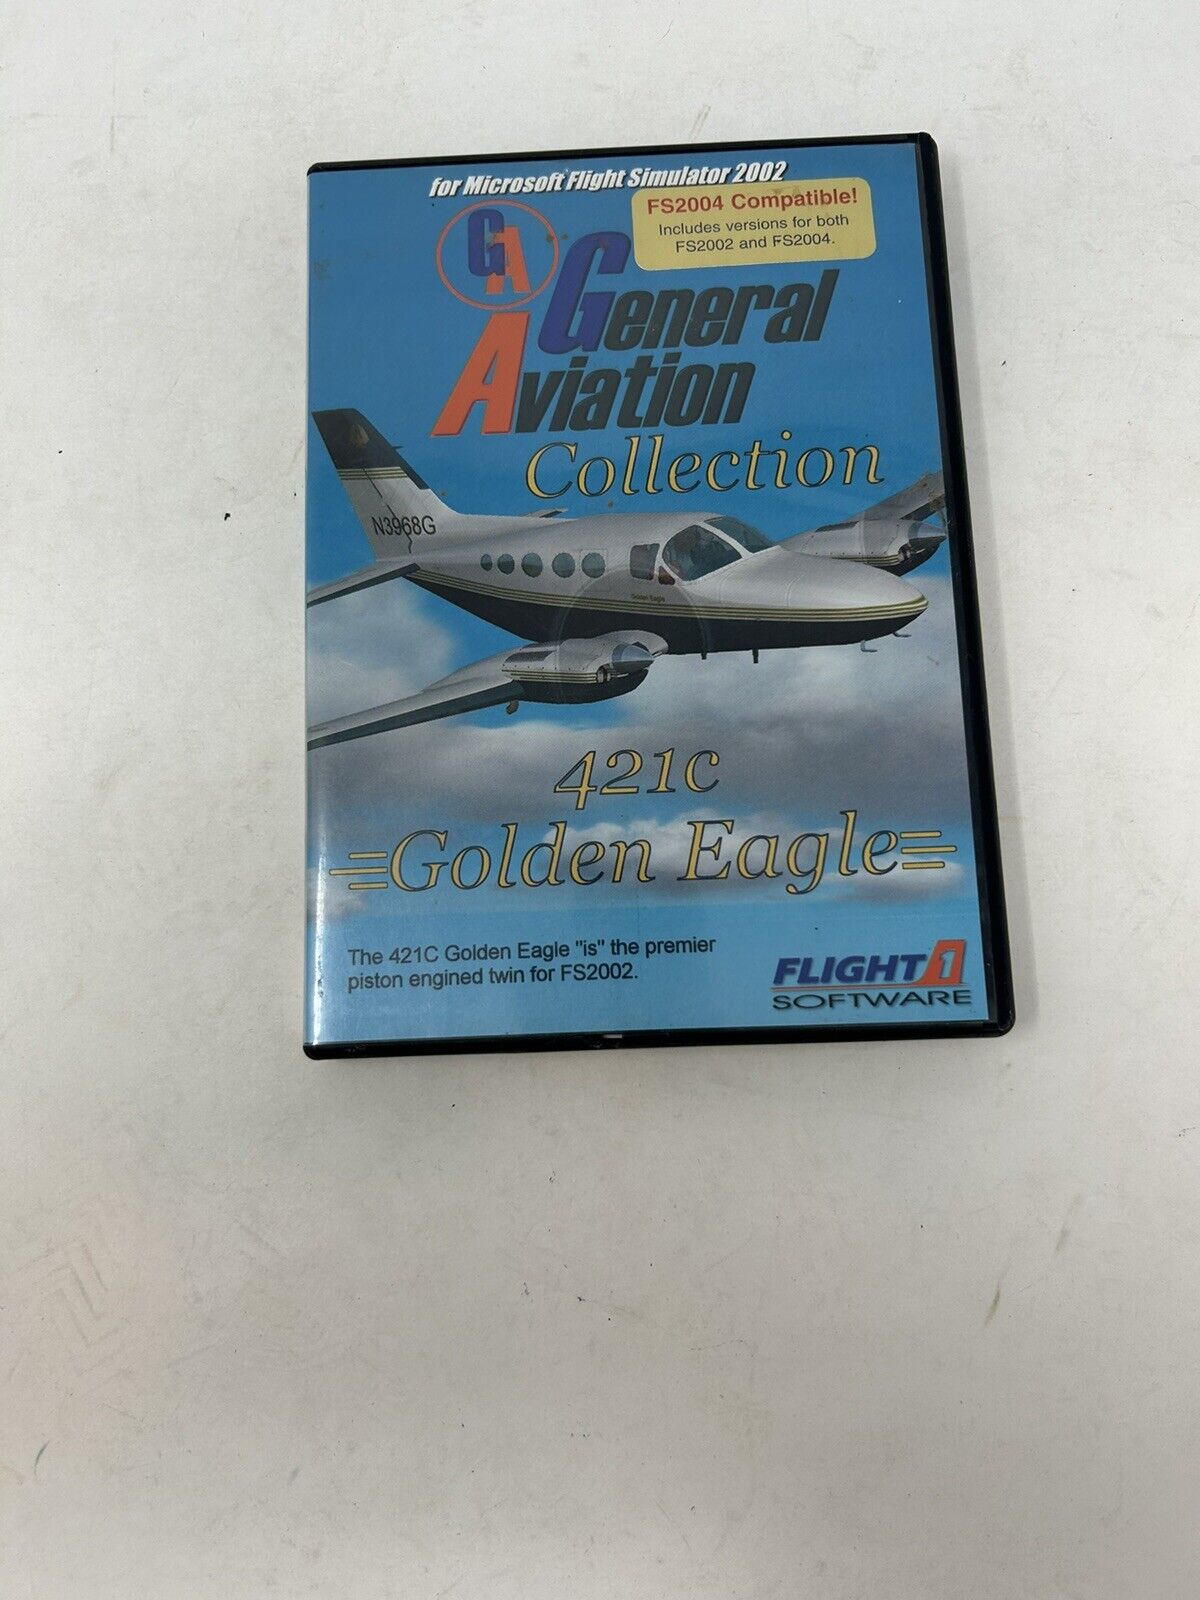 Microsoft Flight Simulator 2002 - 421C Golden Eagle - Software CD Add On FS2004